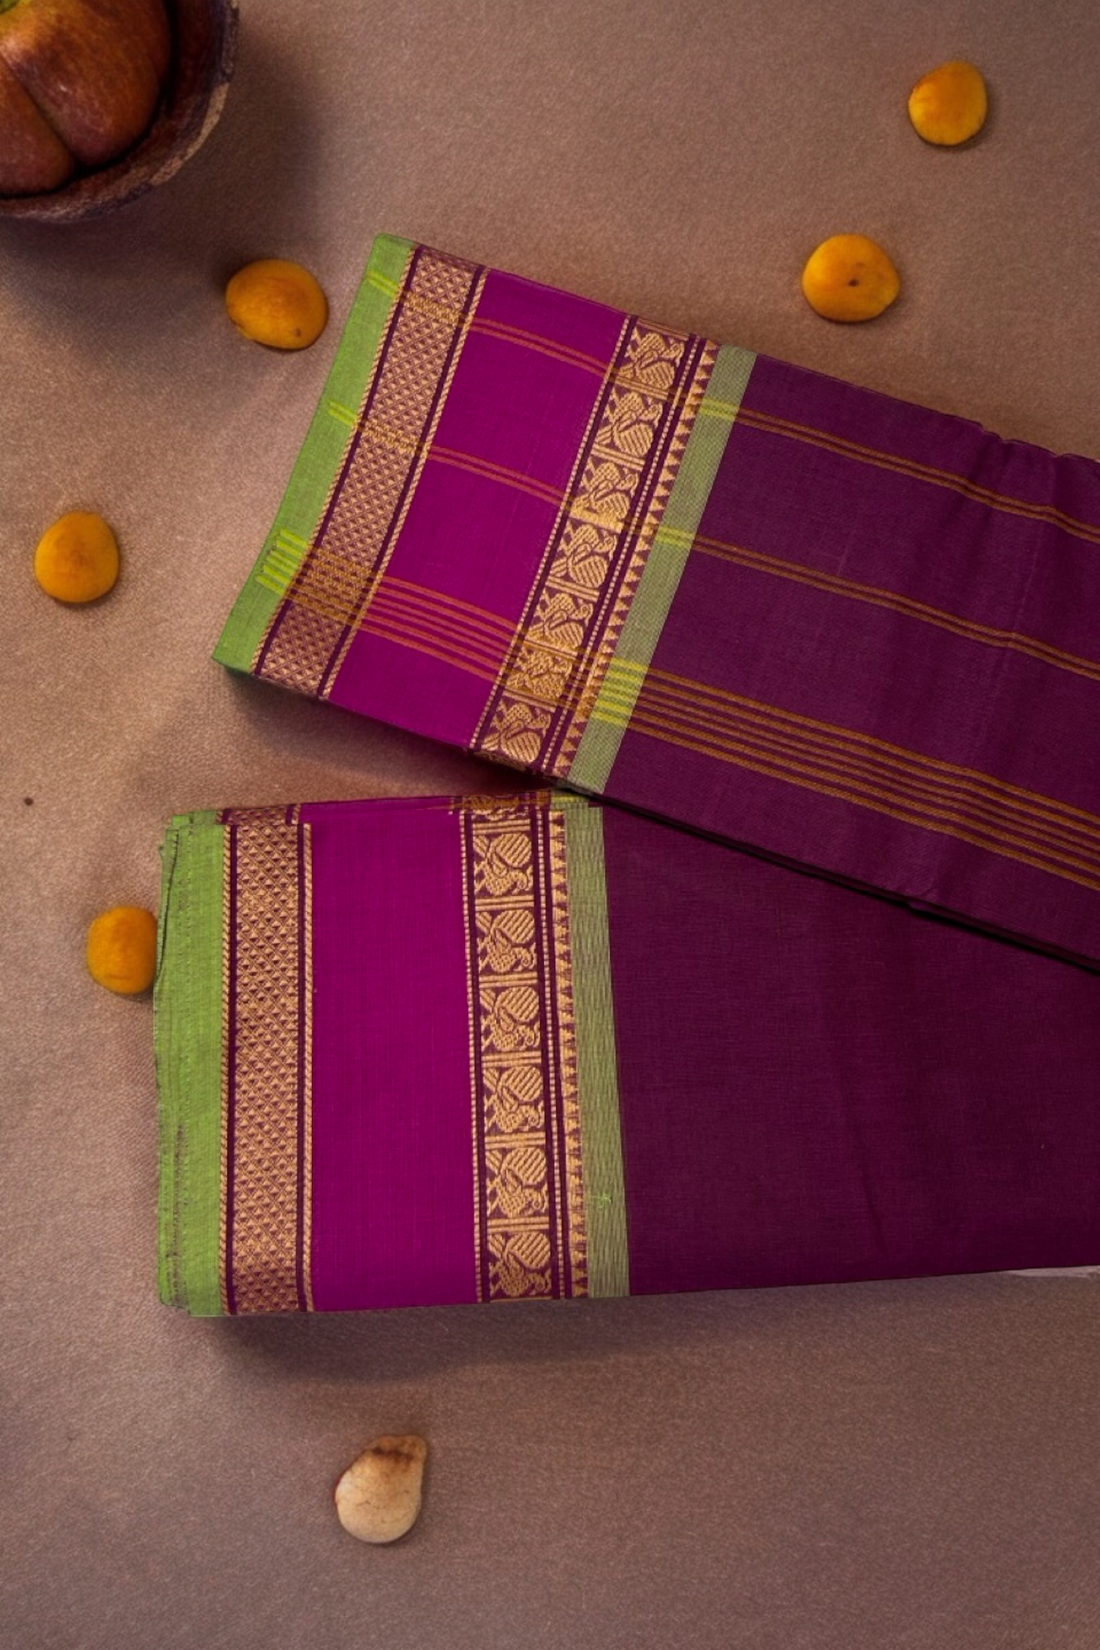 chettinad cotton saree - celebratory hues of purple